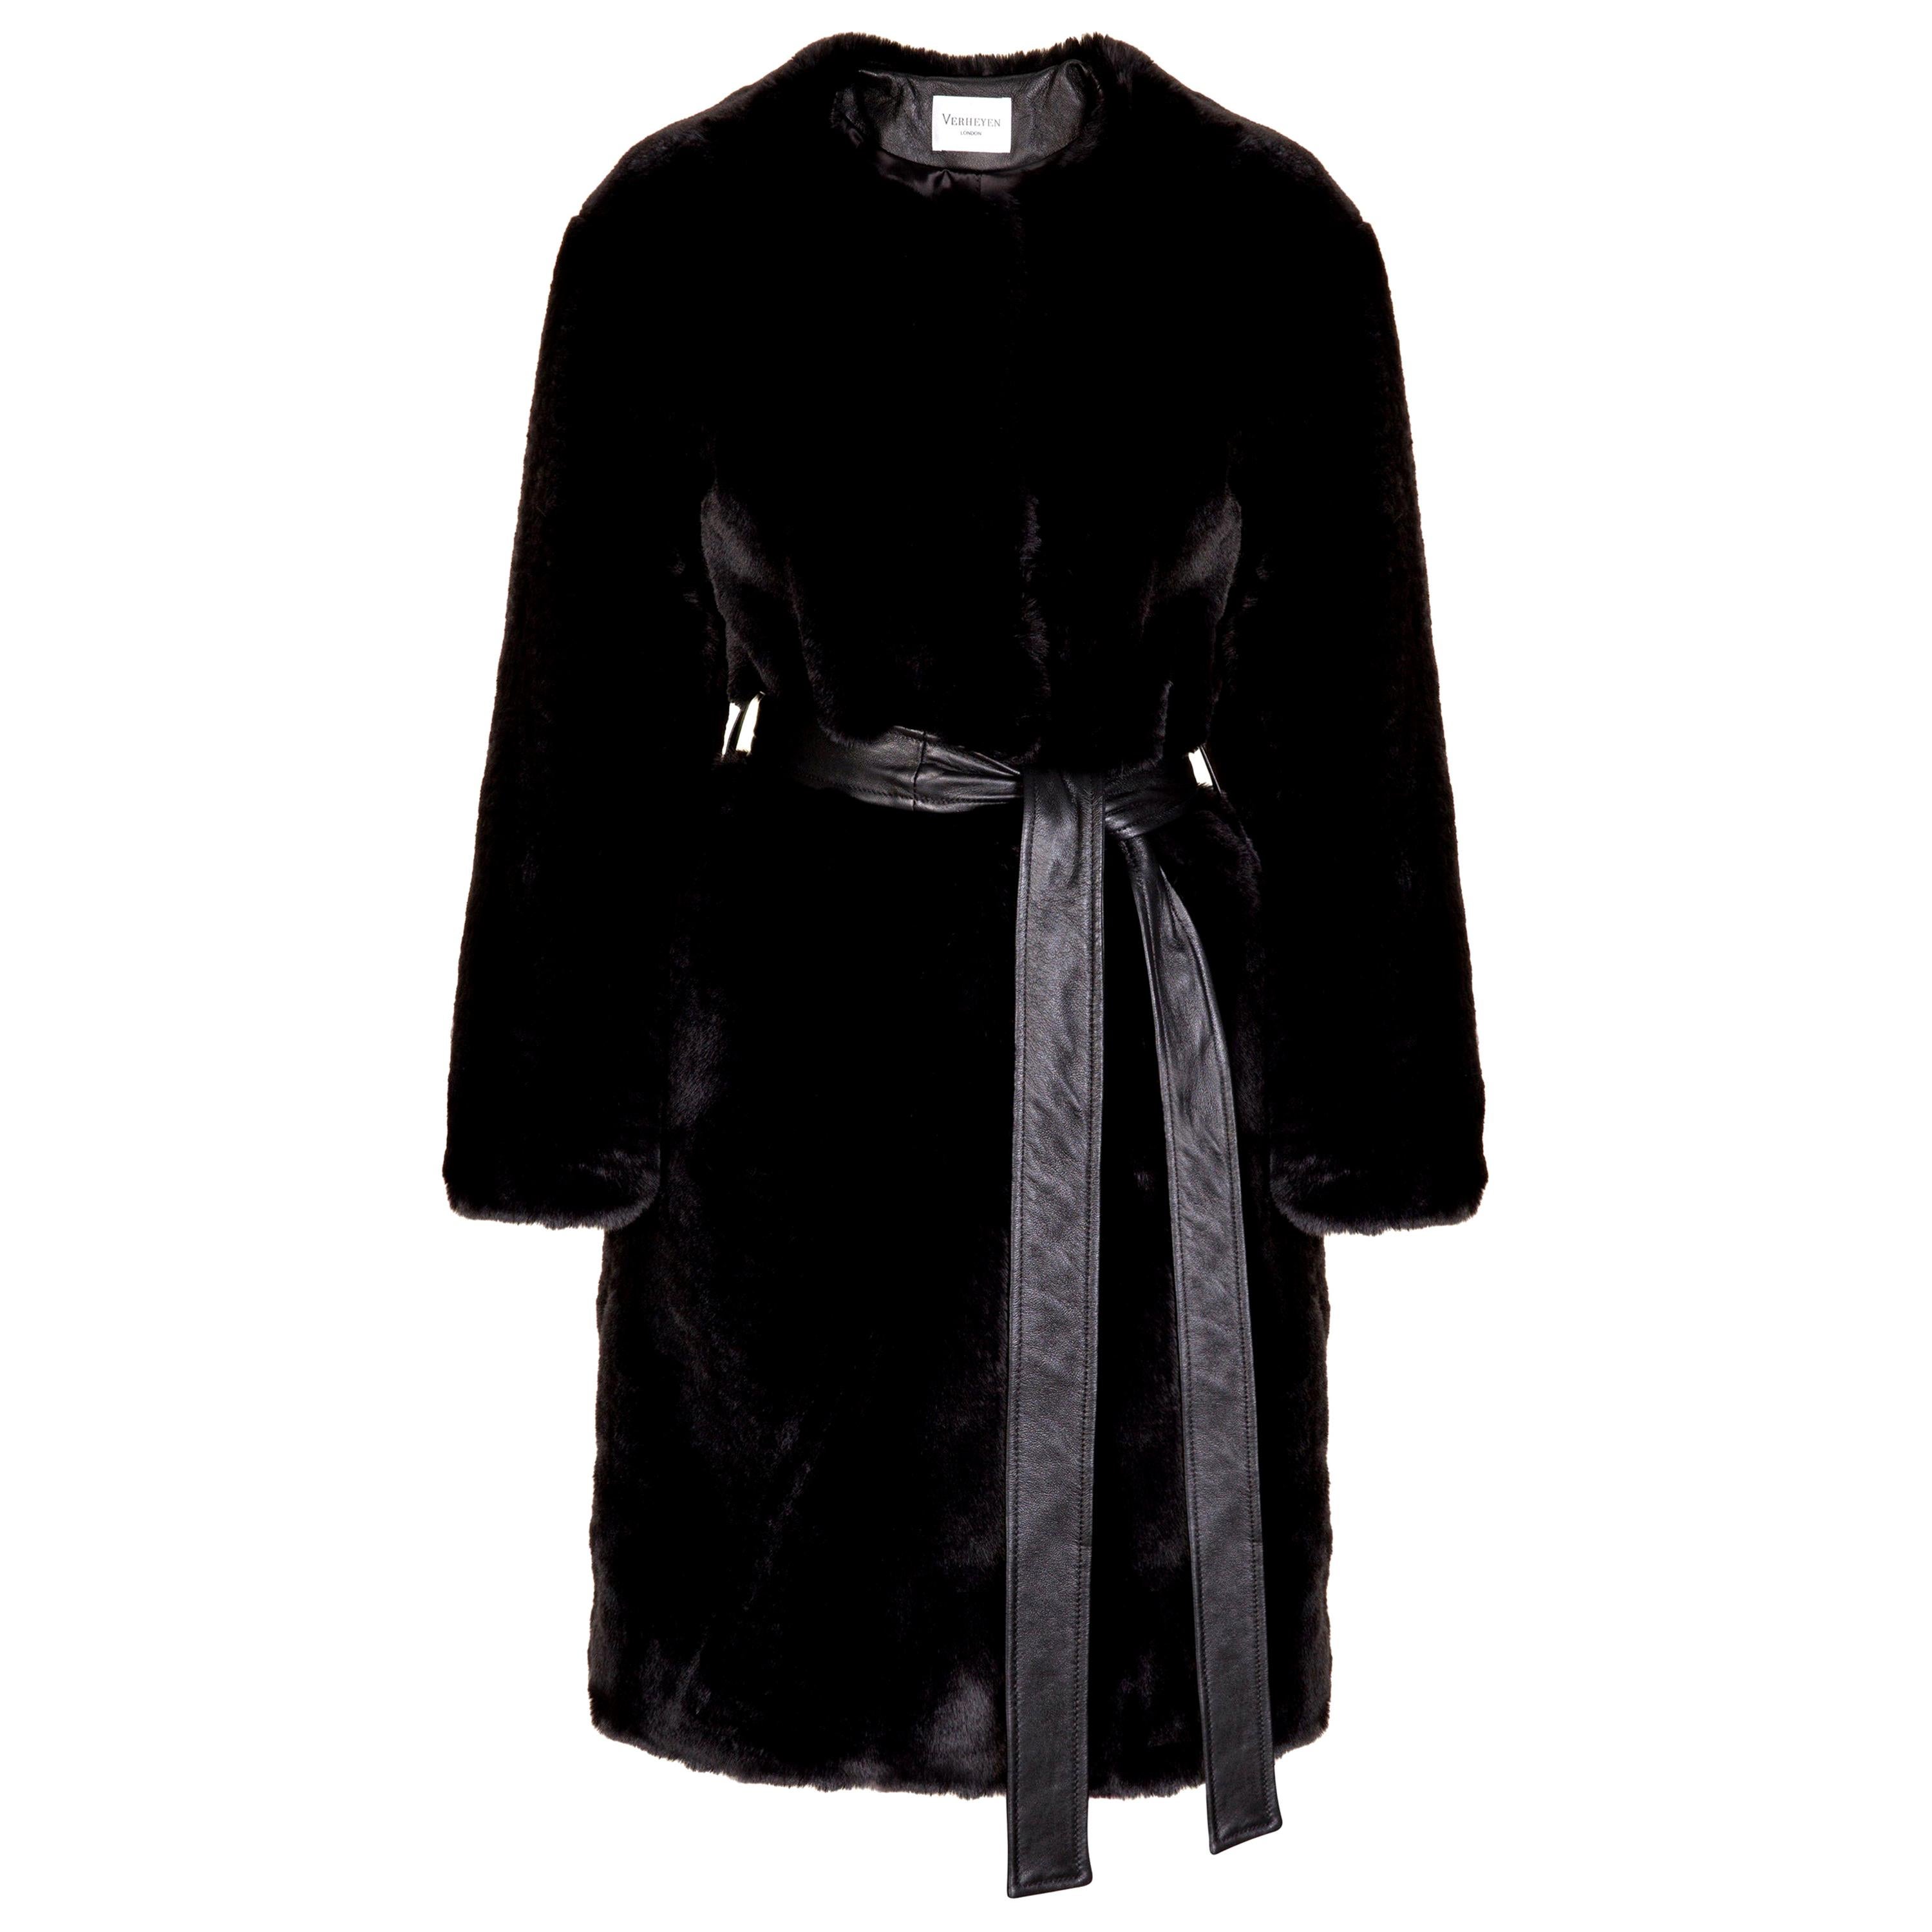 Verheyen London Serena  Collarless Faux Fur Coat in Black - Size uk 12